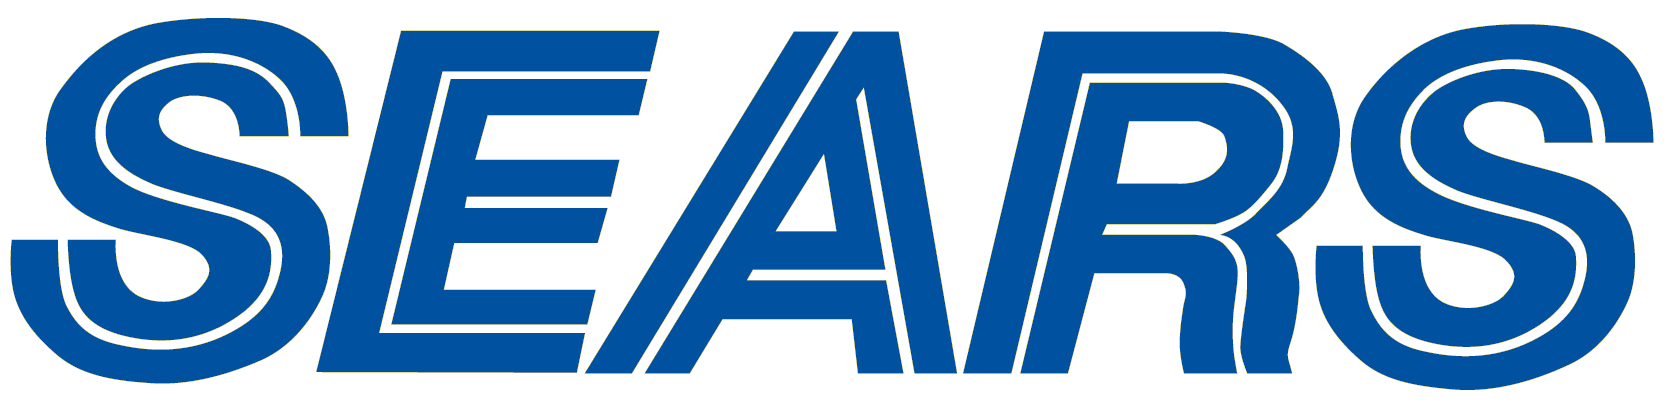 Sears Holding Corporation Logo photo - 1